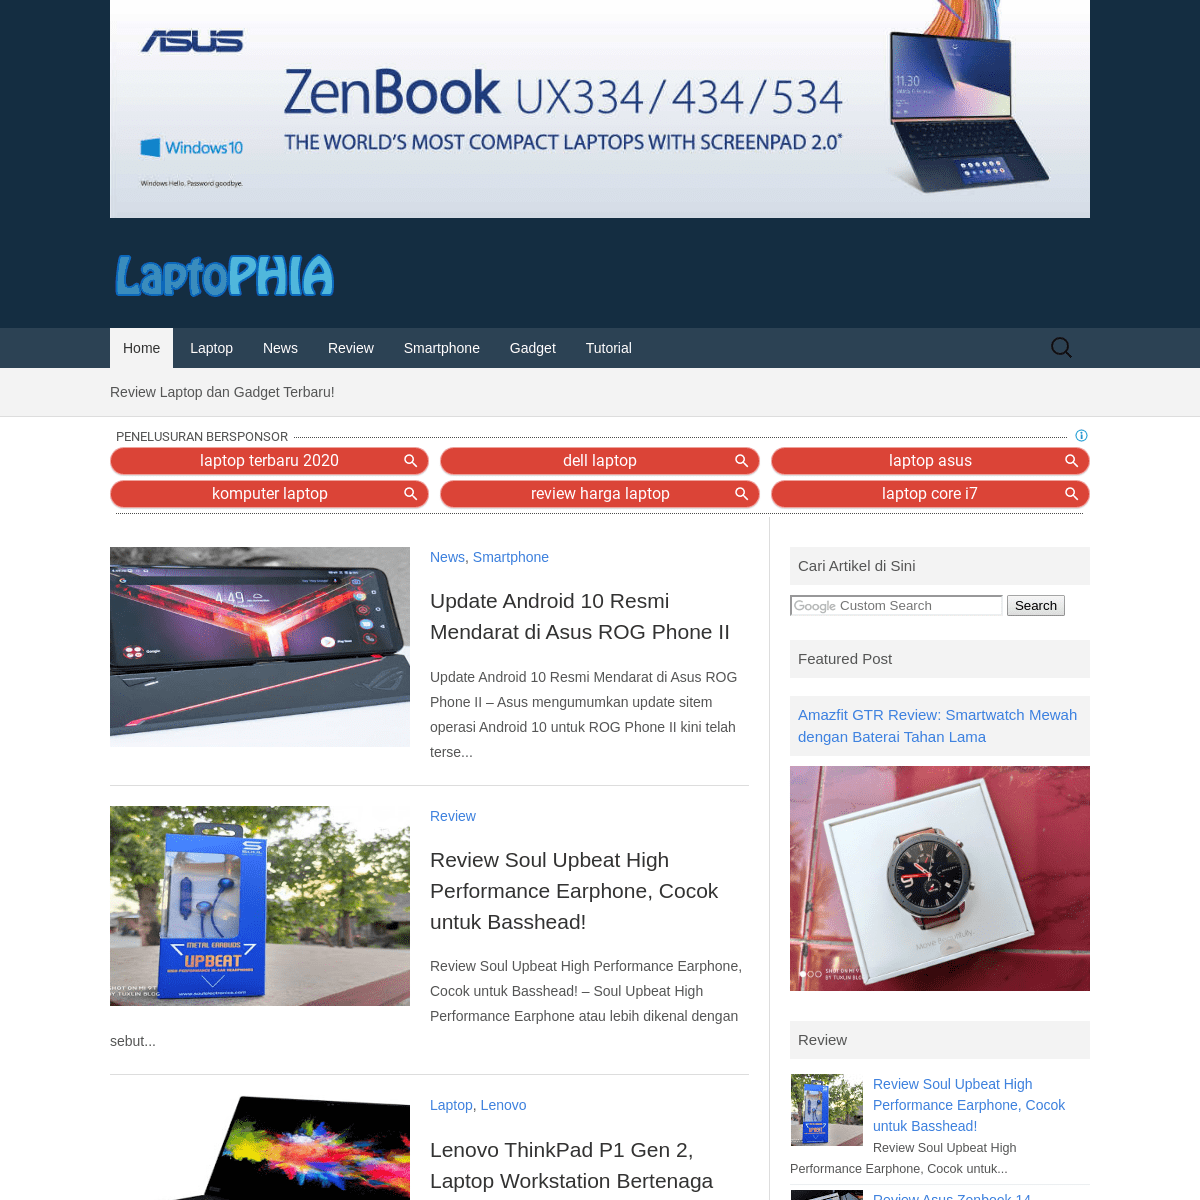 A complete backup of laptophia.com